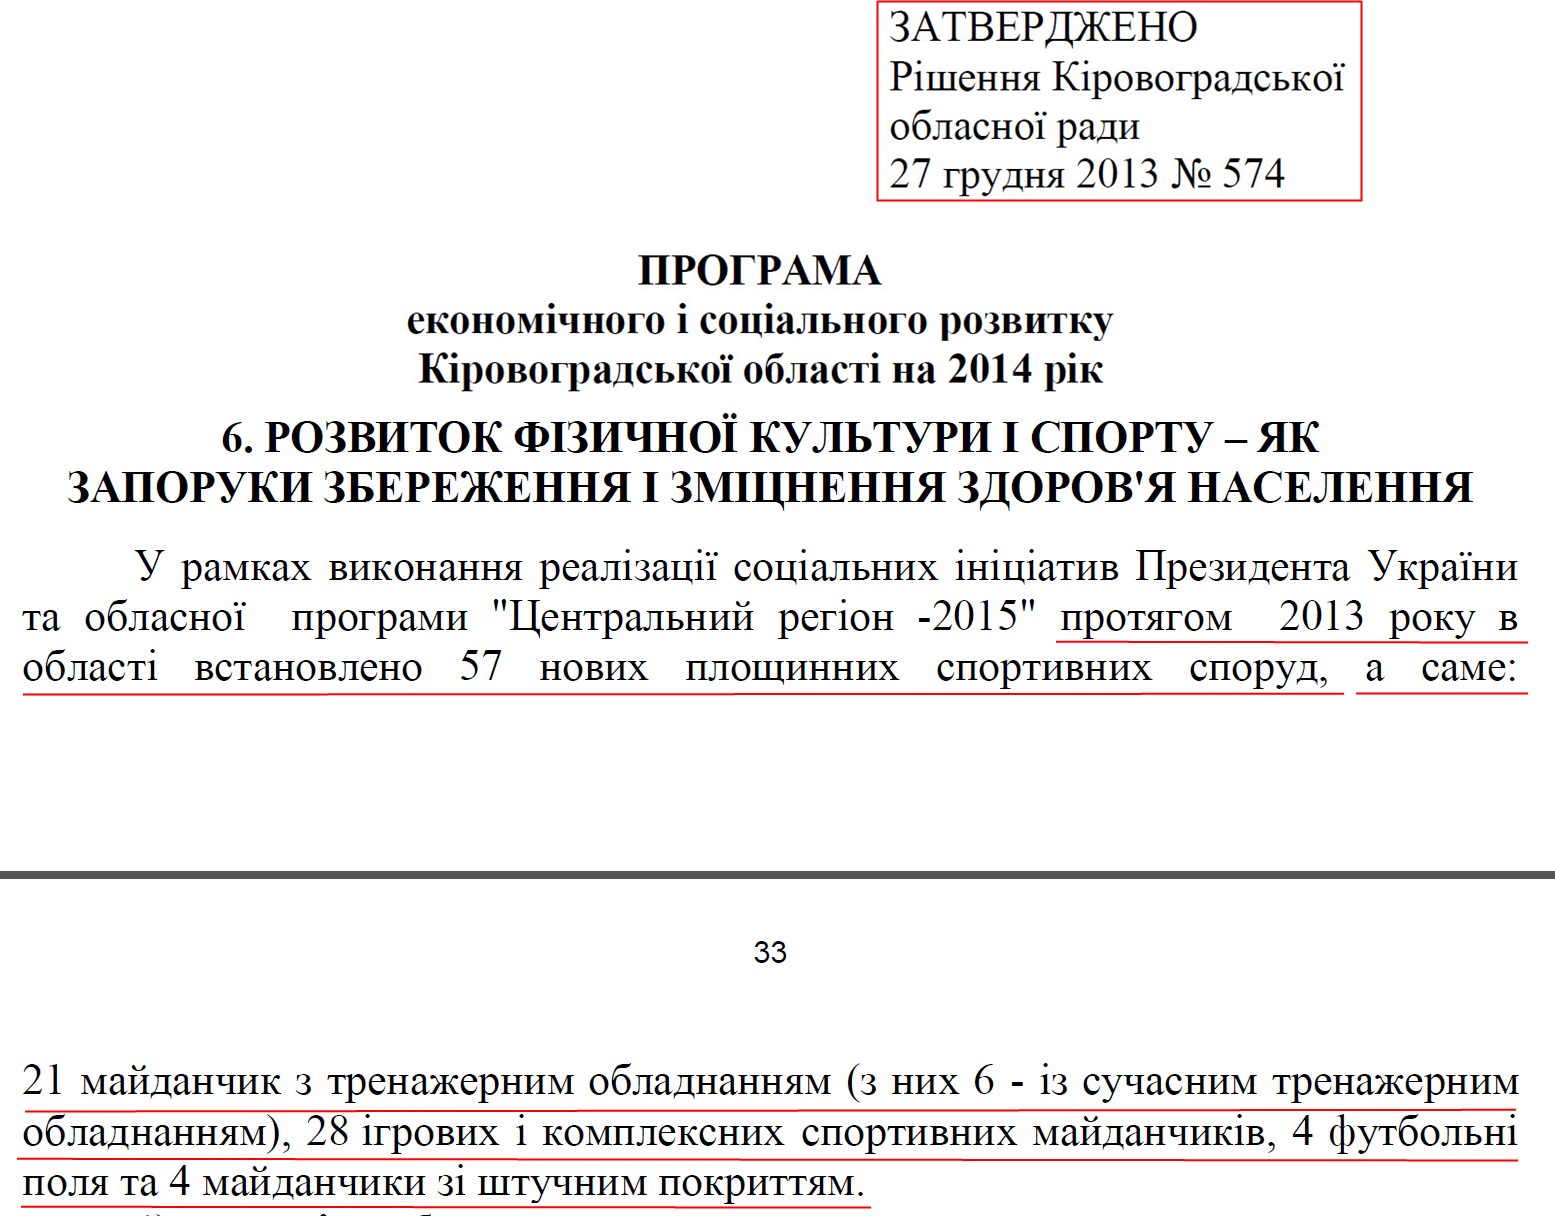 http://www.oblrada.kirovograd.ua/download/documents/file/987/574.zip